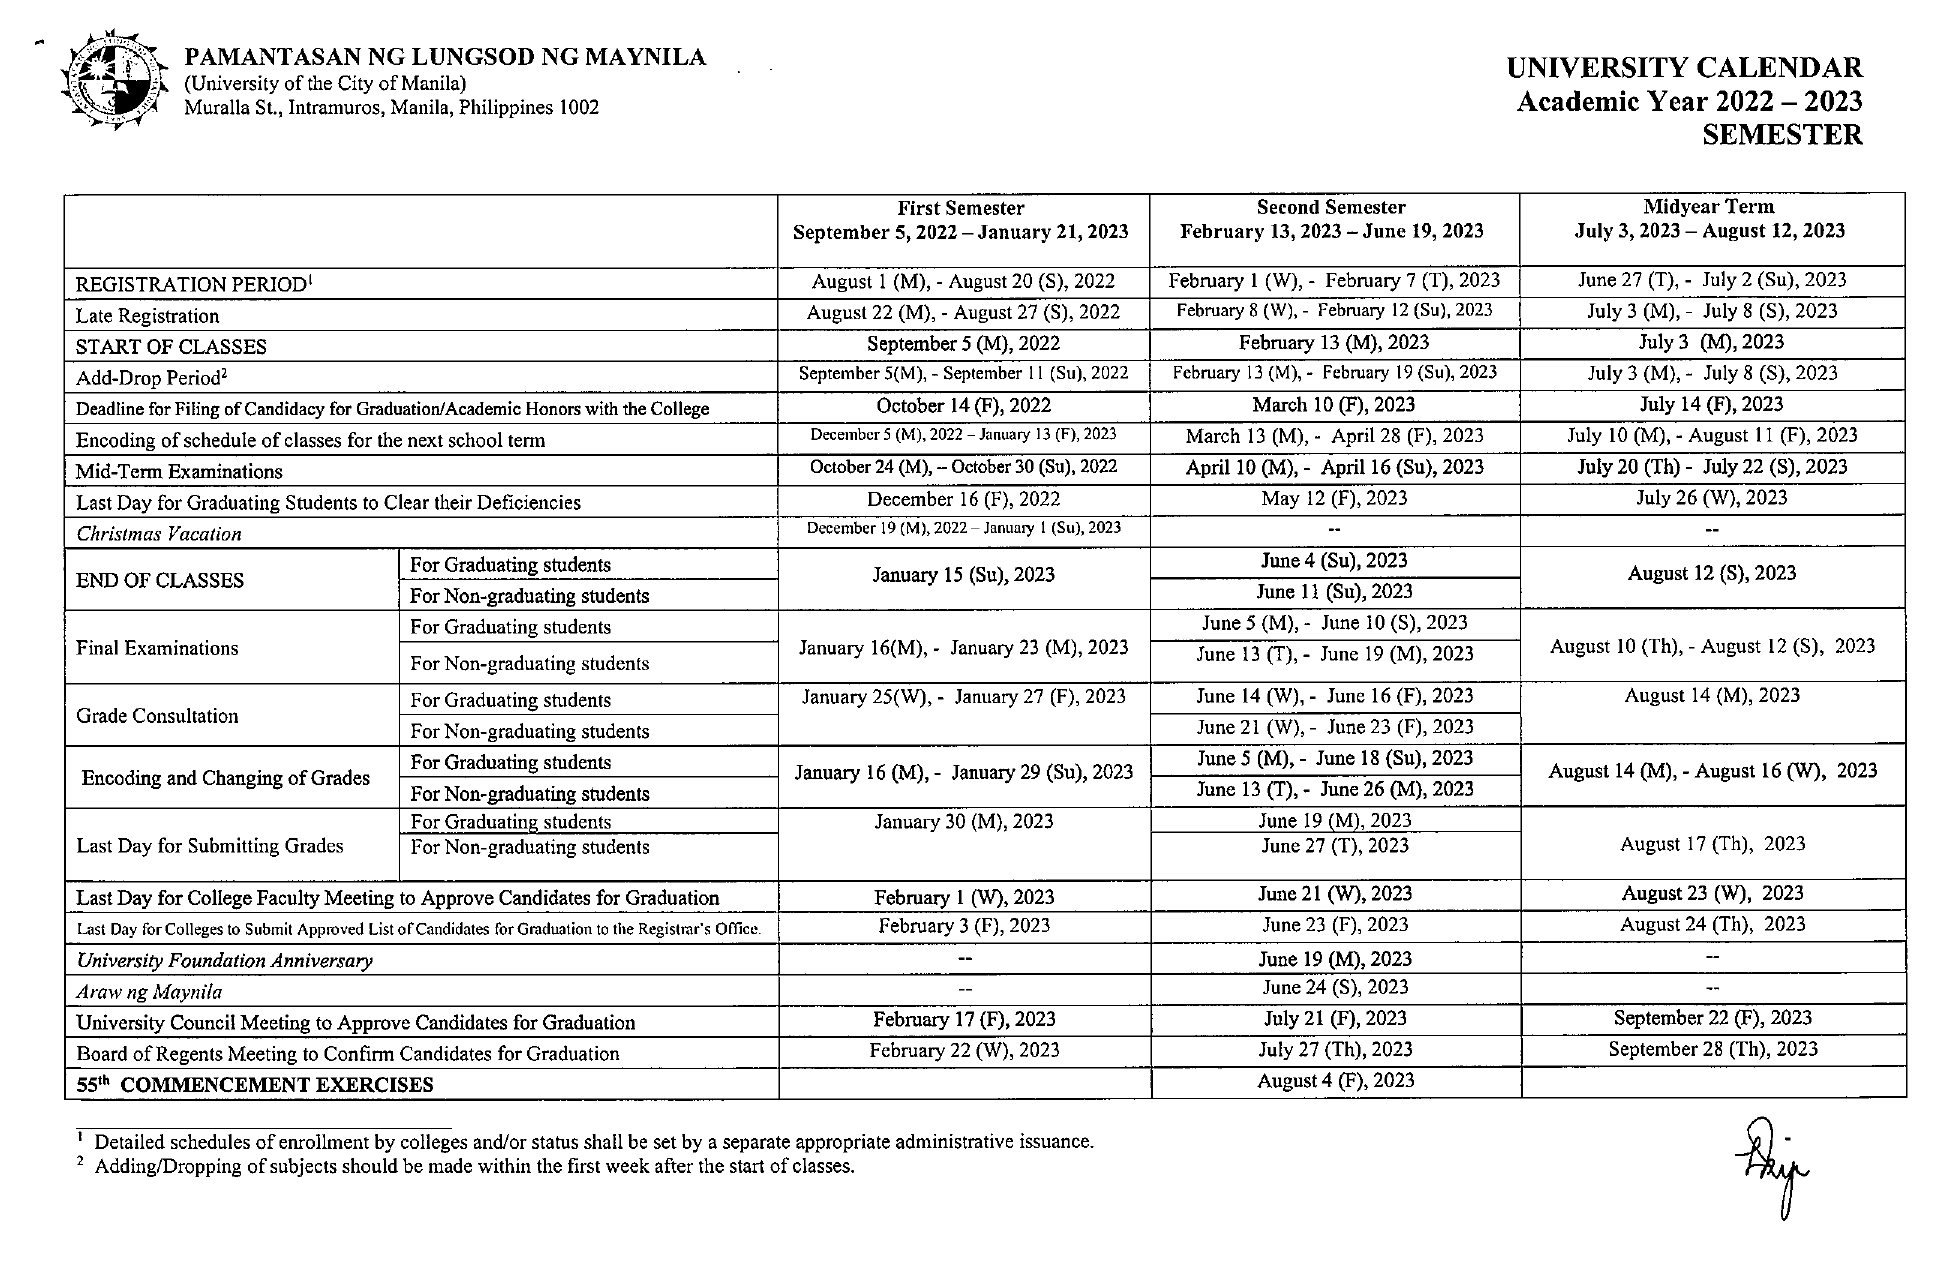 University Calendar SY 2022 2023 page 0001